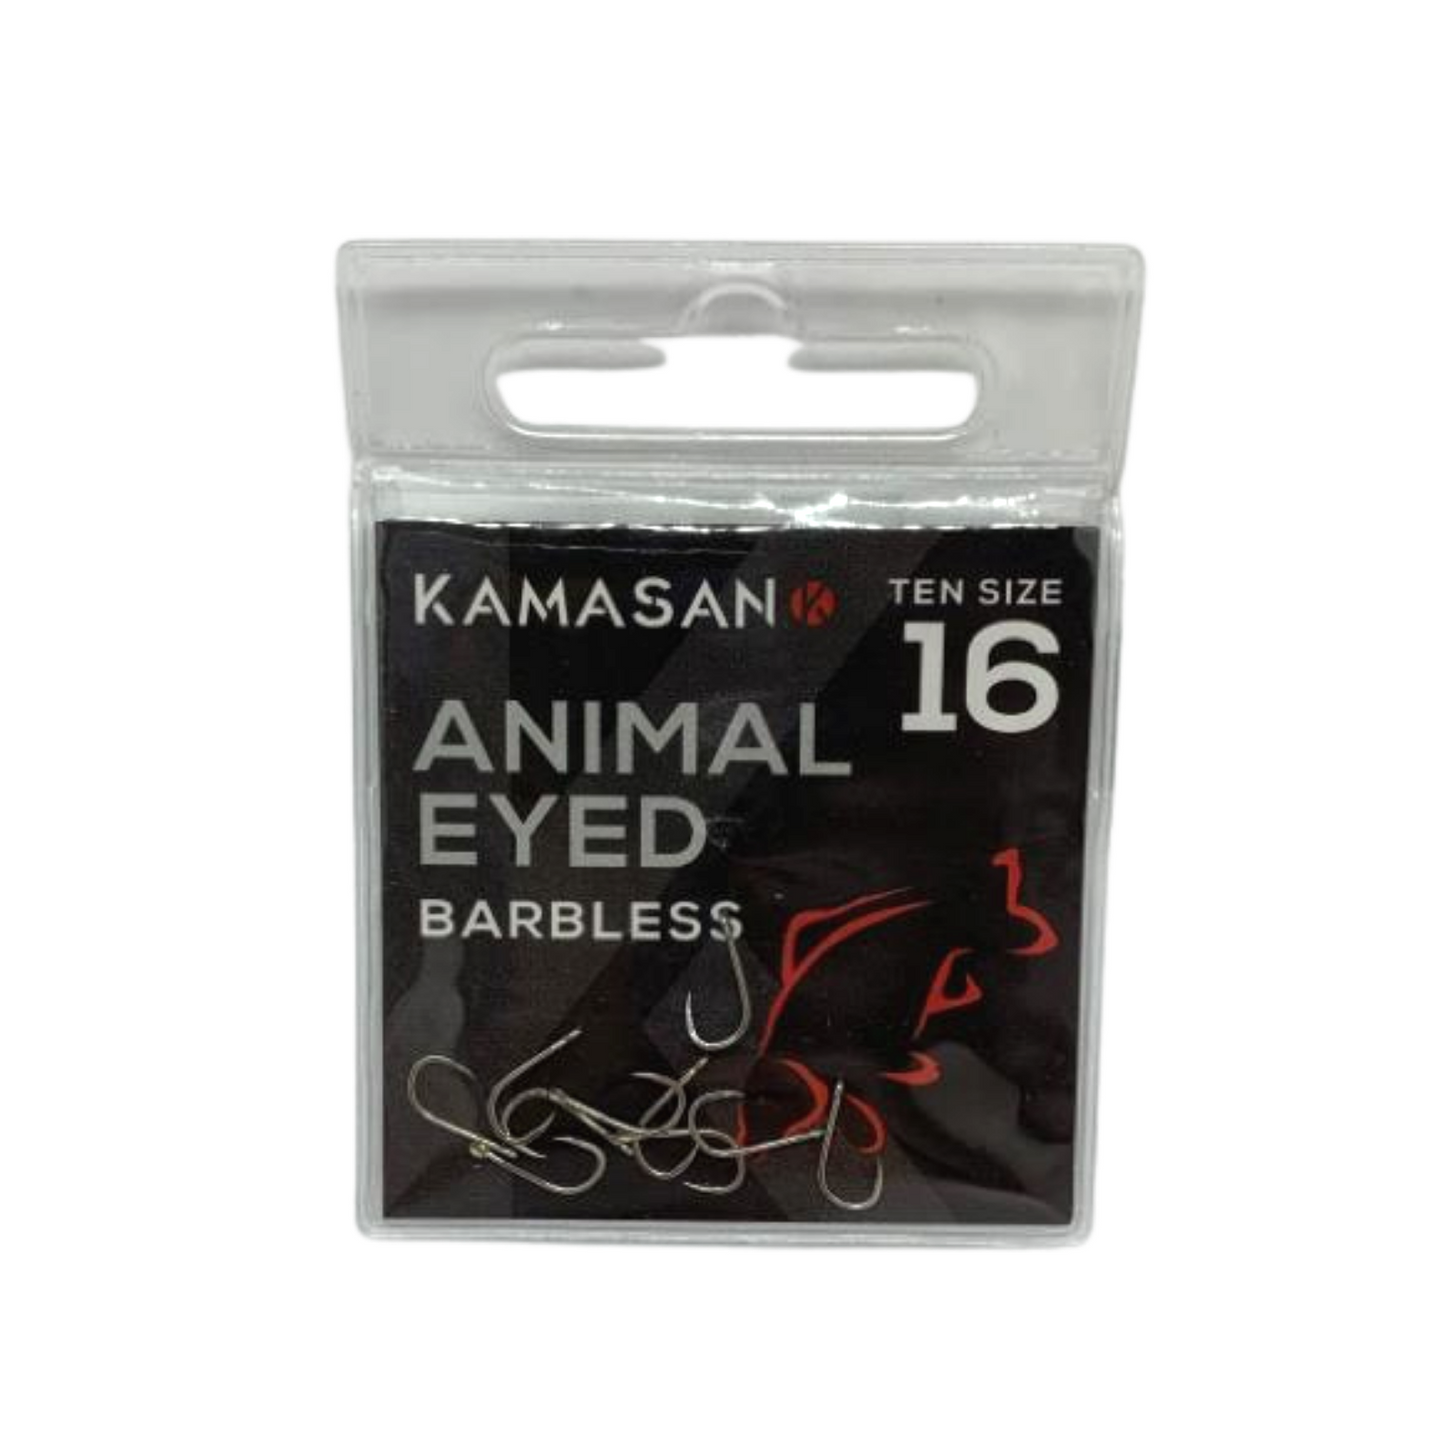 Kamasan Animal Eyed Hooks - Size 16 - Very Popular Pattern.